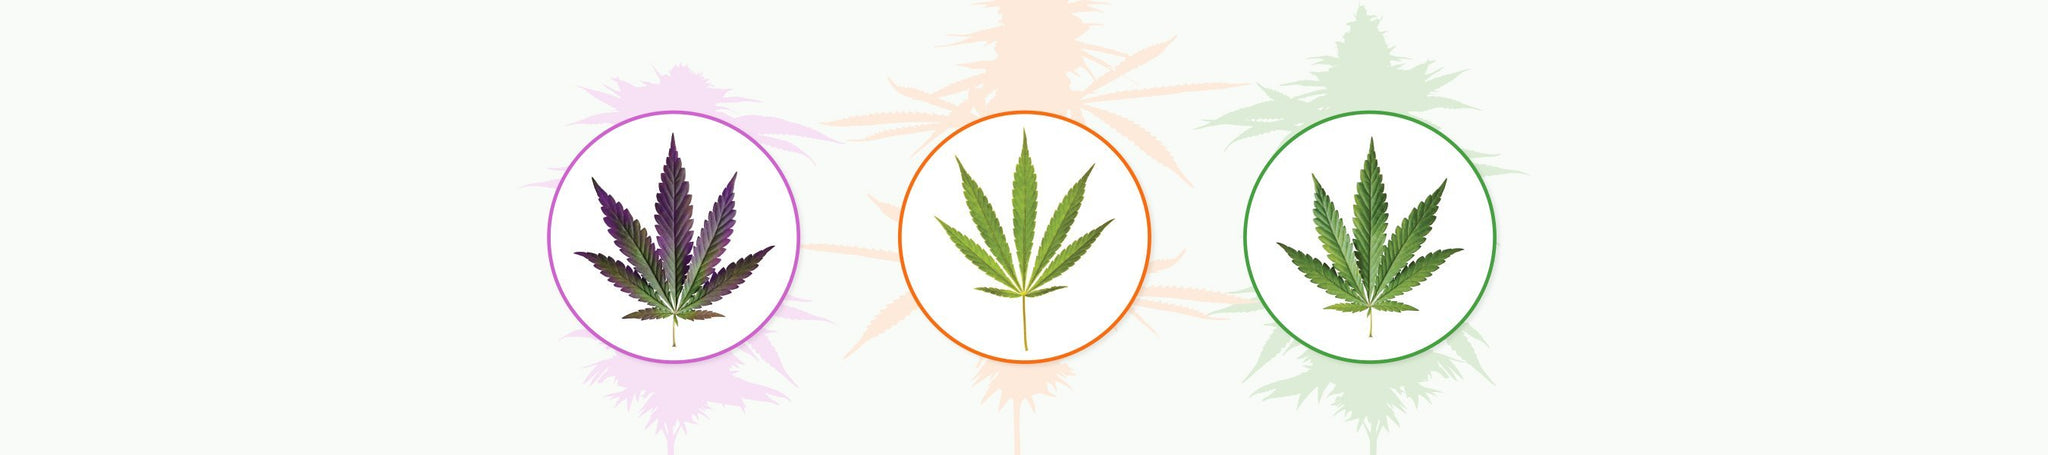 Indica, Sativa, and Hybrid Cannabis Plants